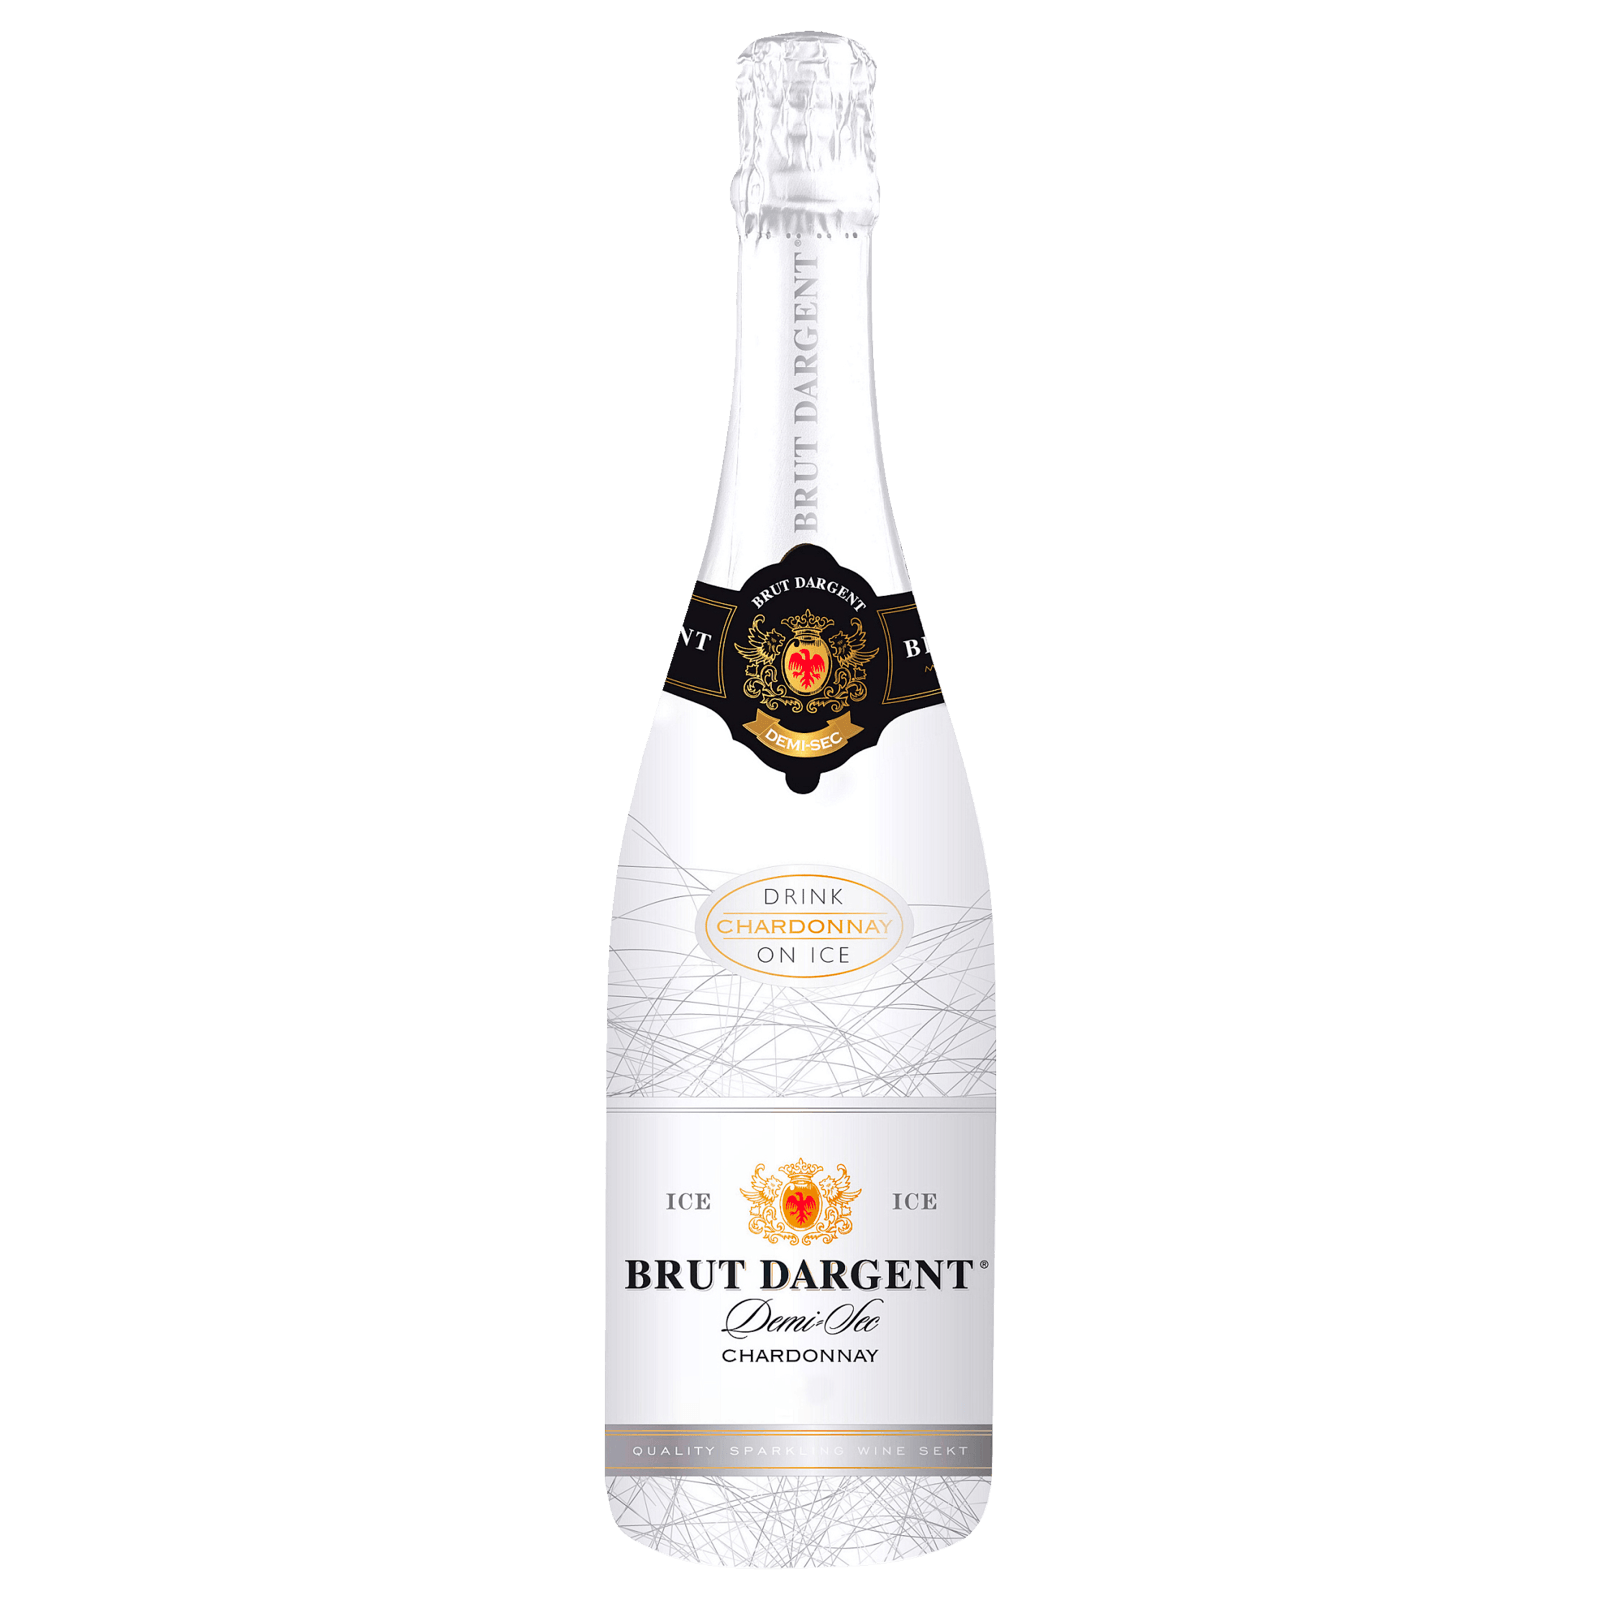 Brut Dargent Demi-Sec Chardonnay Ice 0,75l  für 8.99 EUR